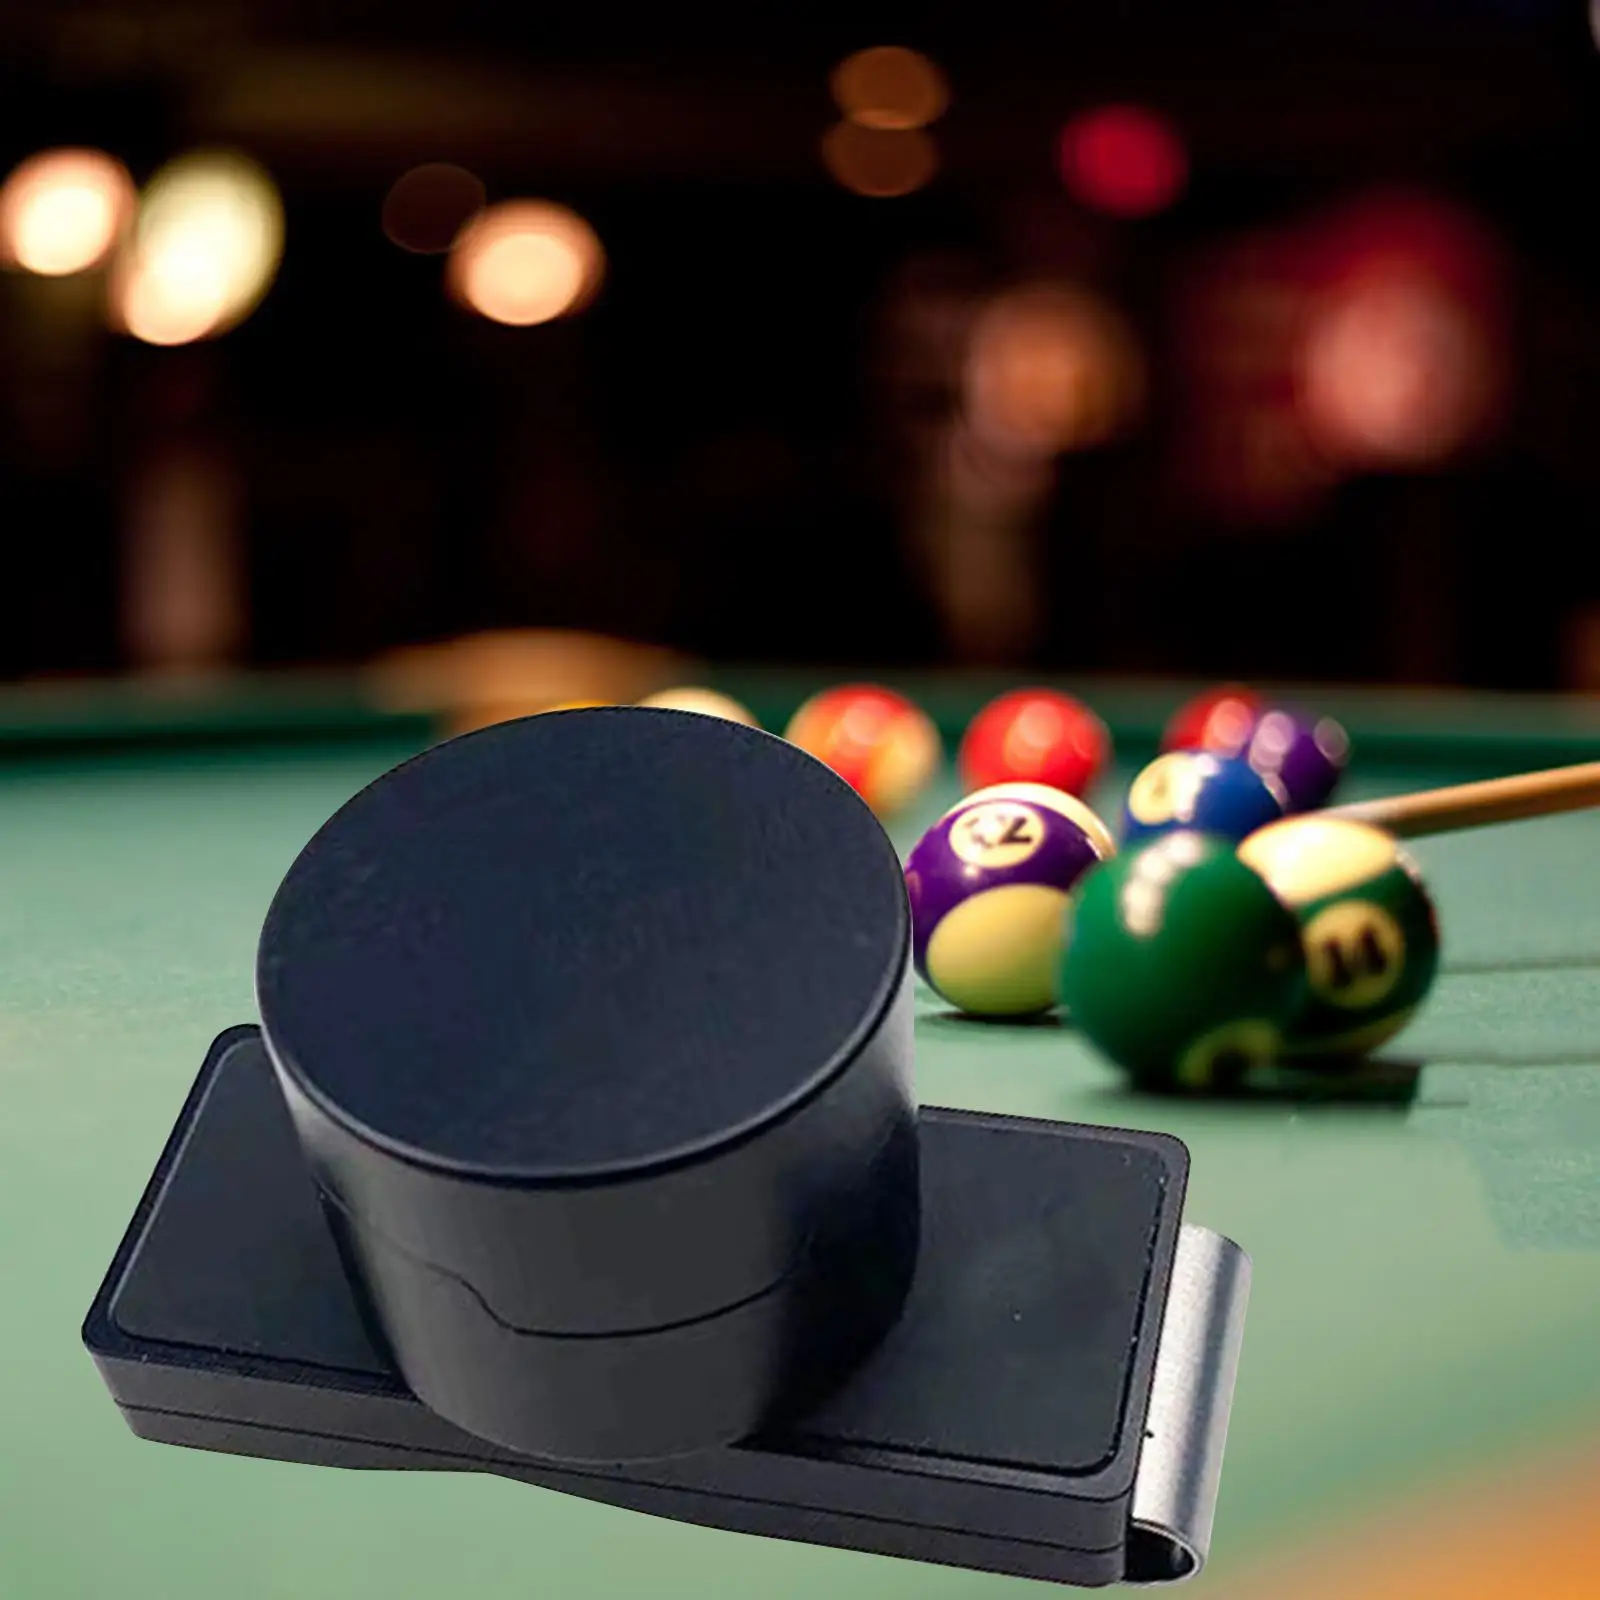 Billiard Pool Chalk Cup Holders Cue Chalk Cue Tips Billiard Replacement